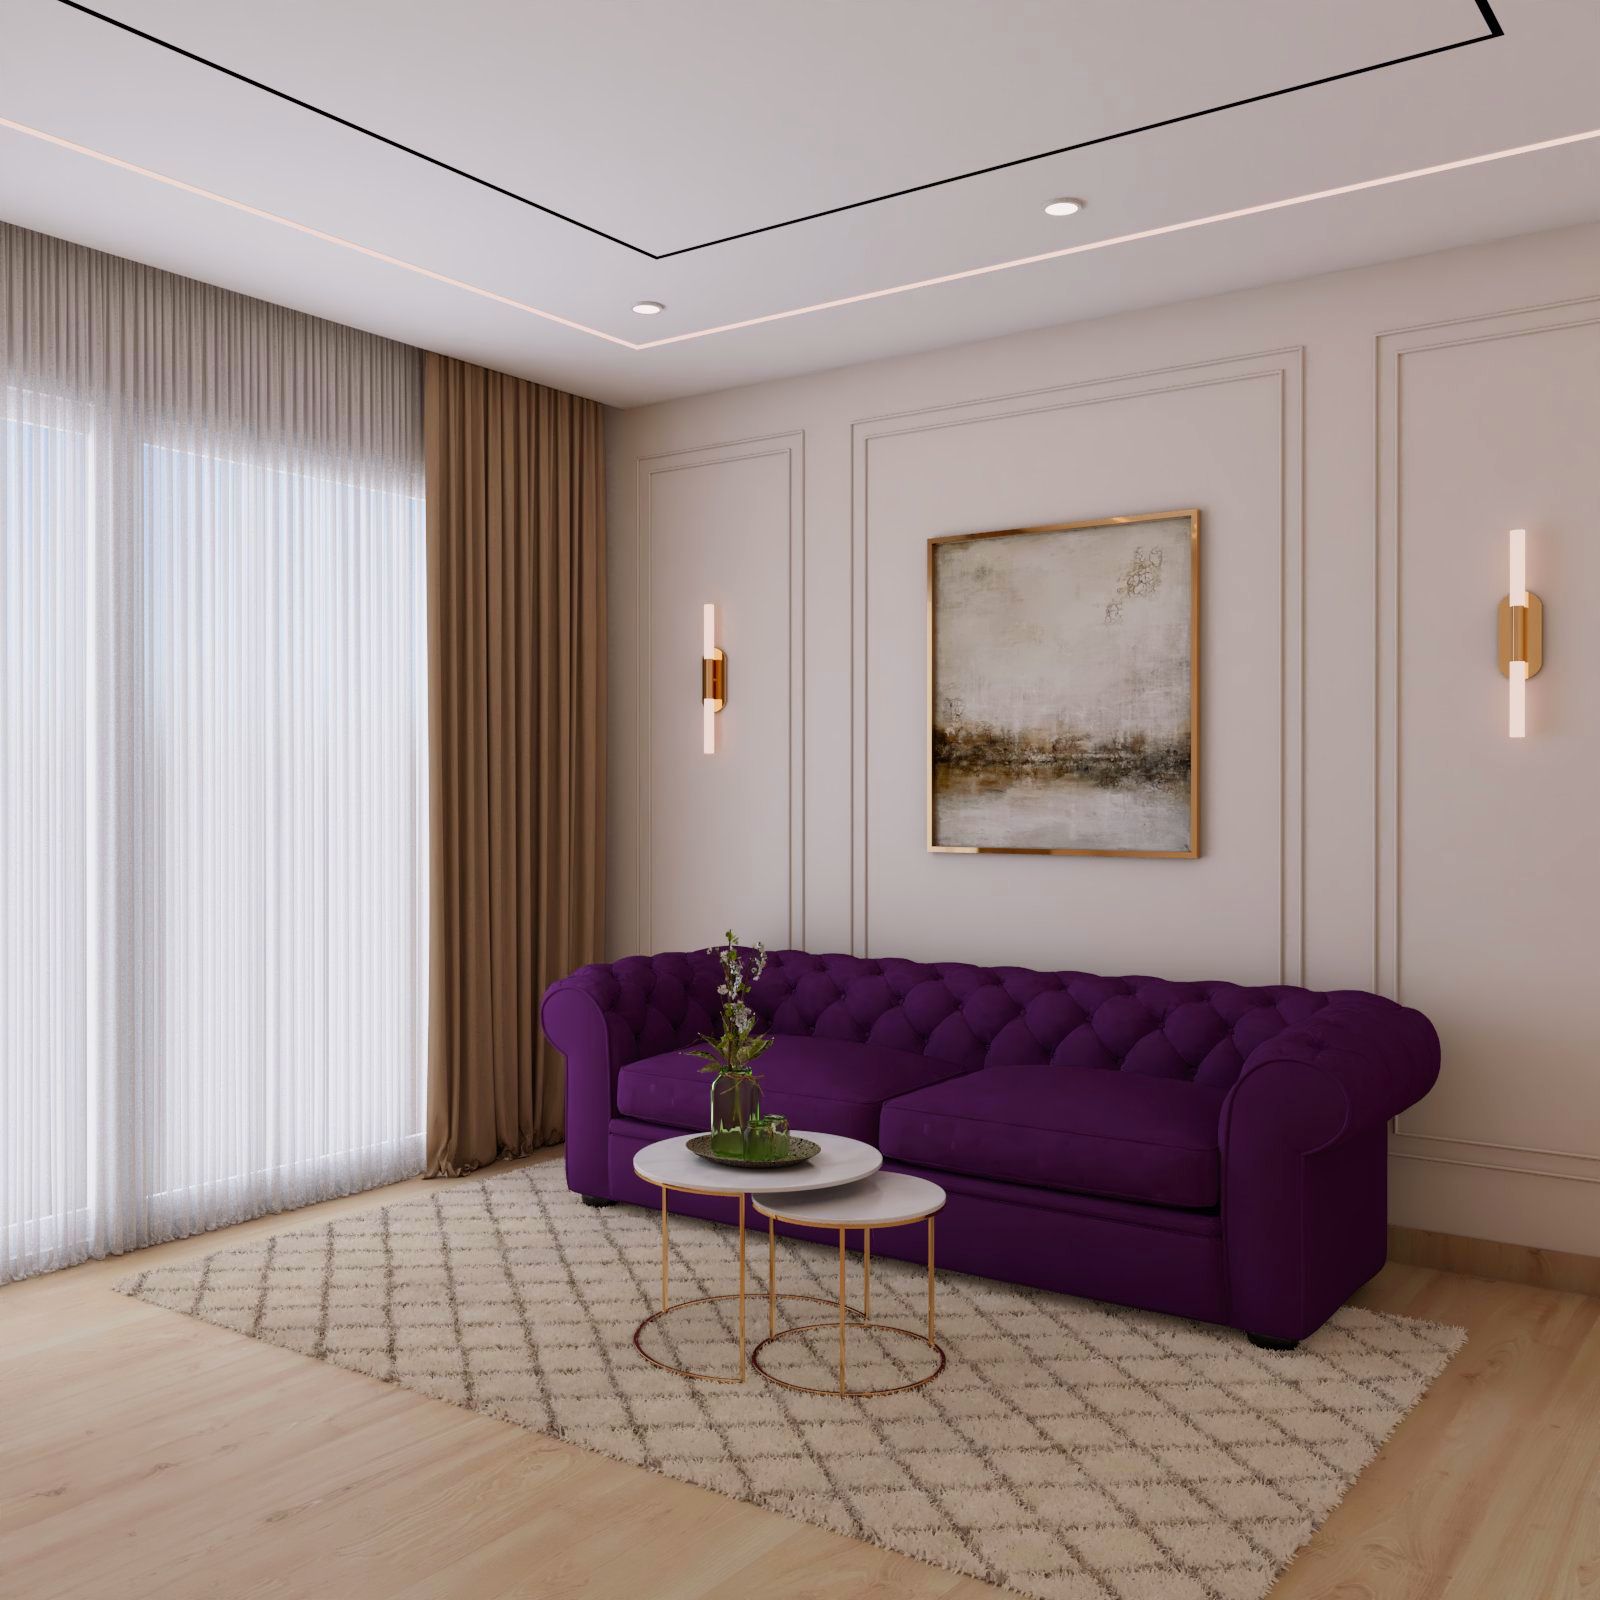 Scandinavian Living Room Design With Two-Seater Dark Purple Sofa